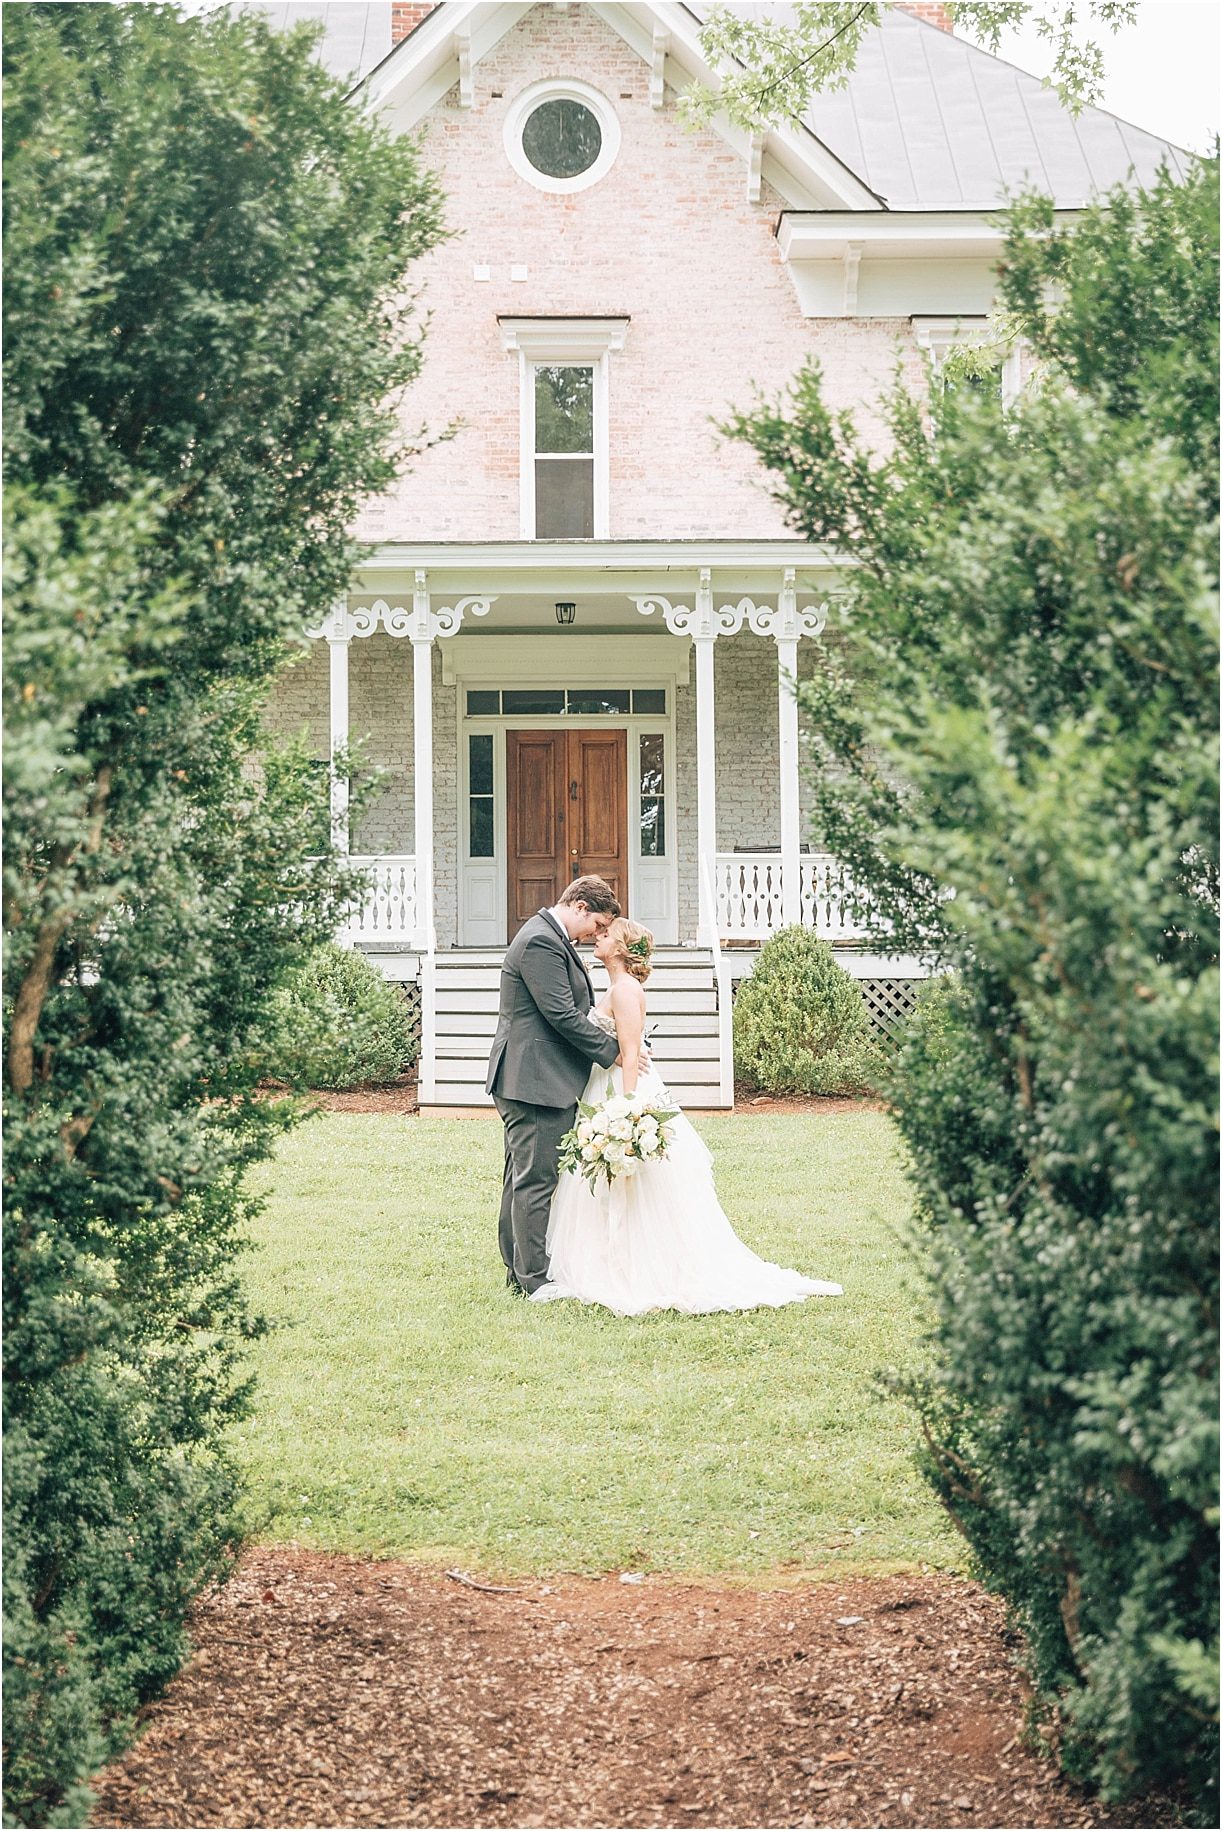 An Intimate Secret Garden Wedding in Virginia | Hill City Bride Virginia Wedding Inspiration Blog